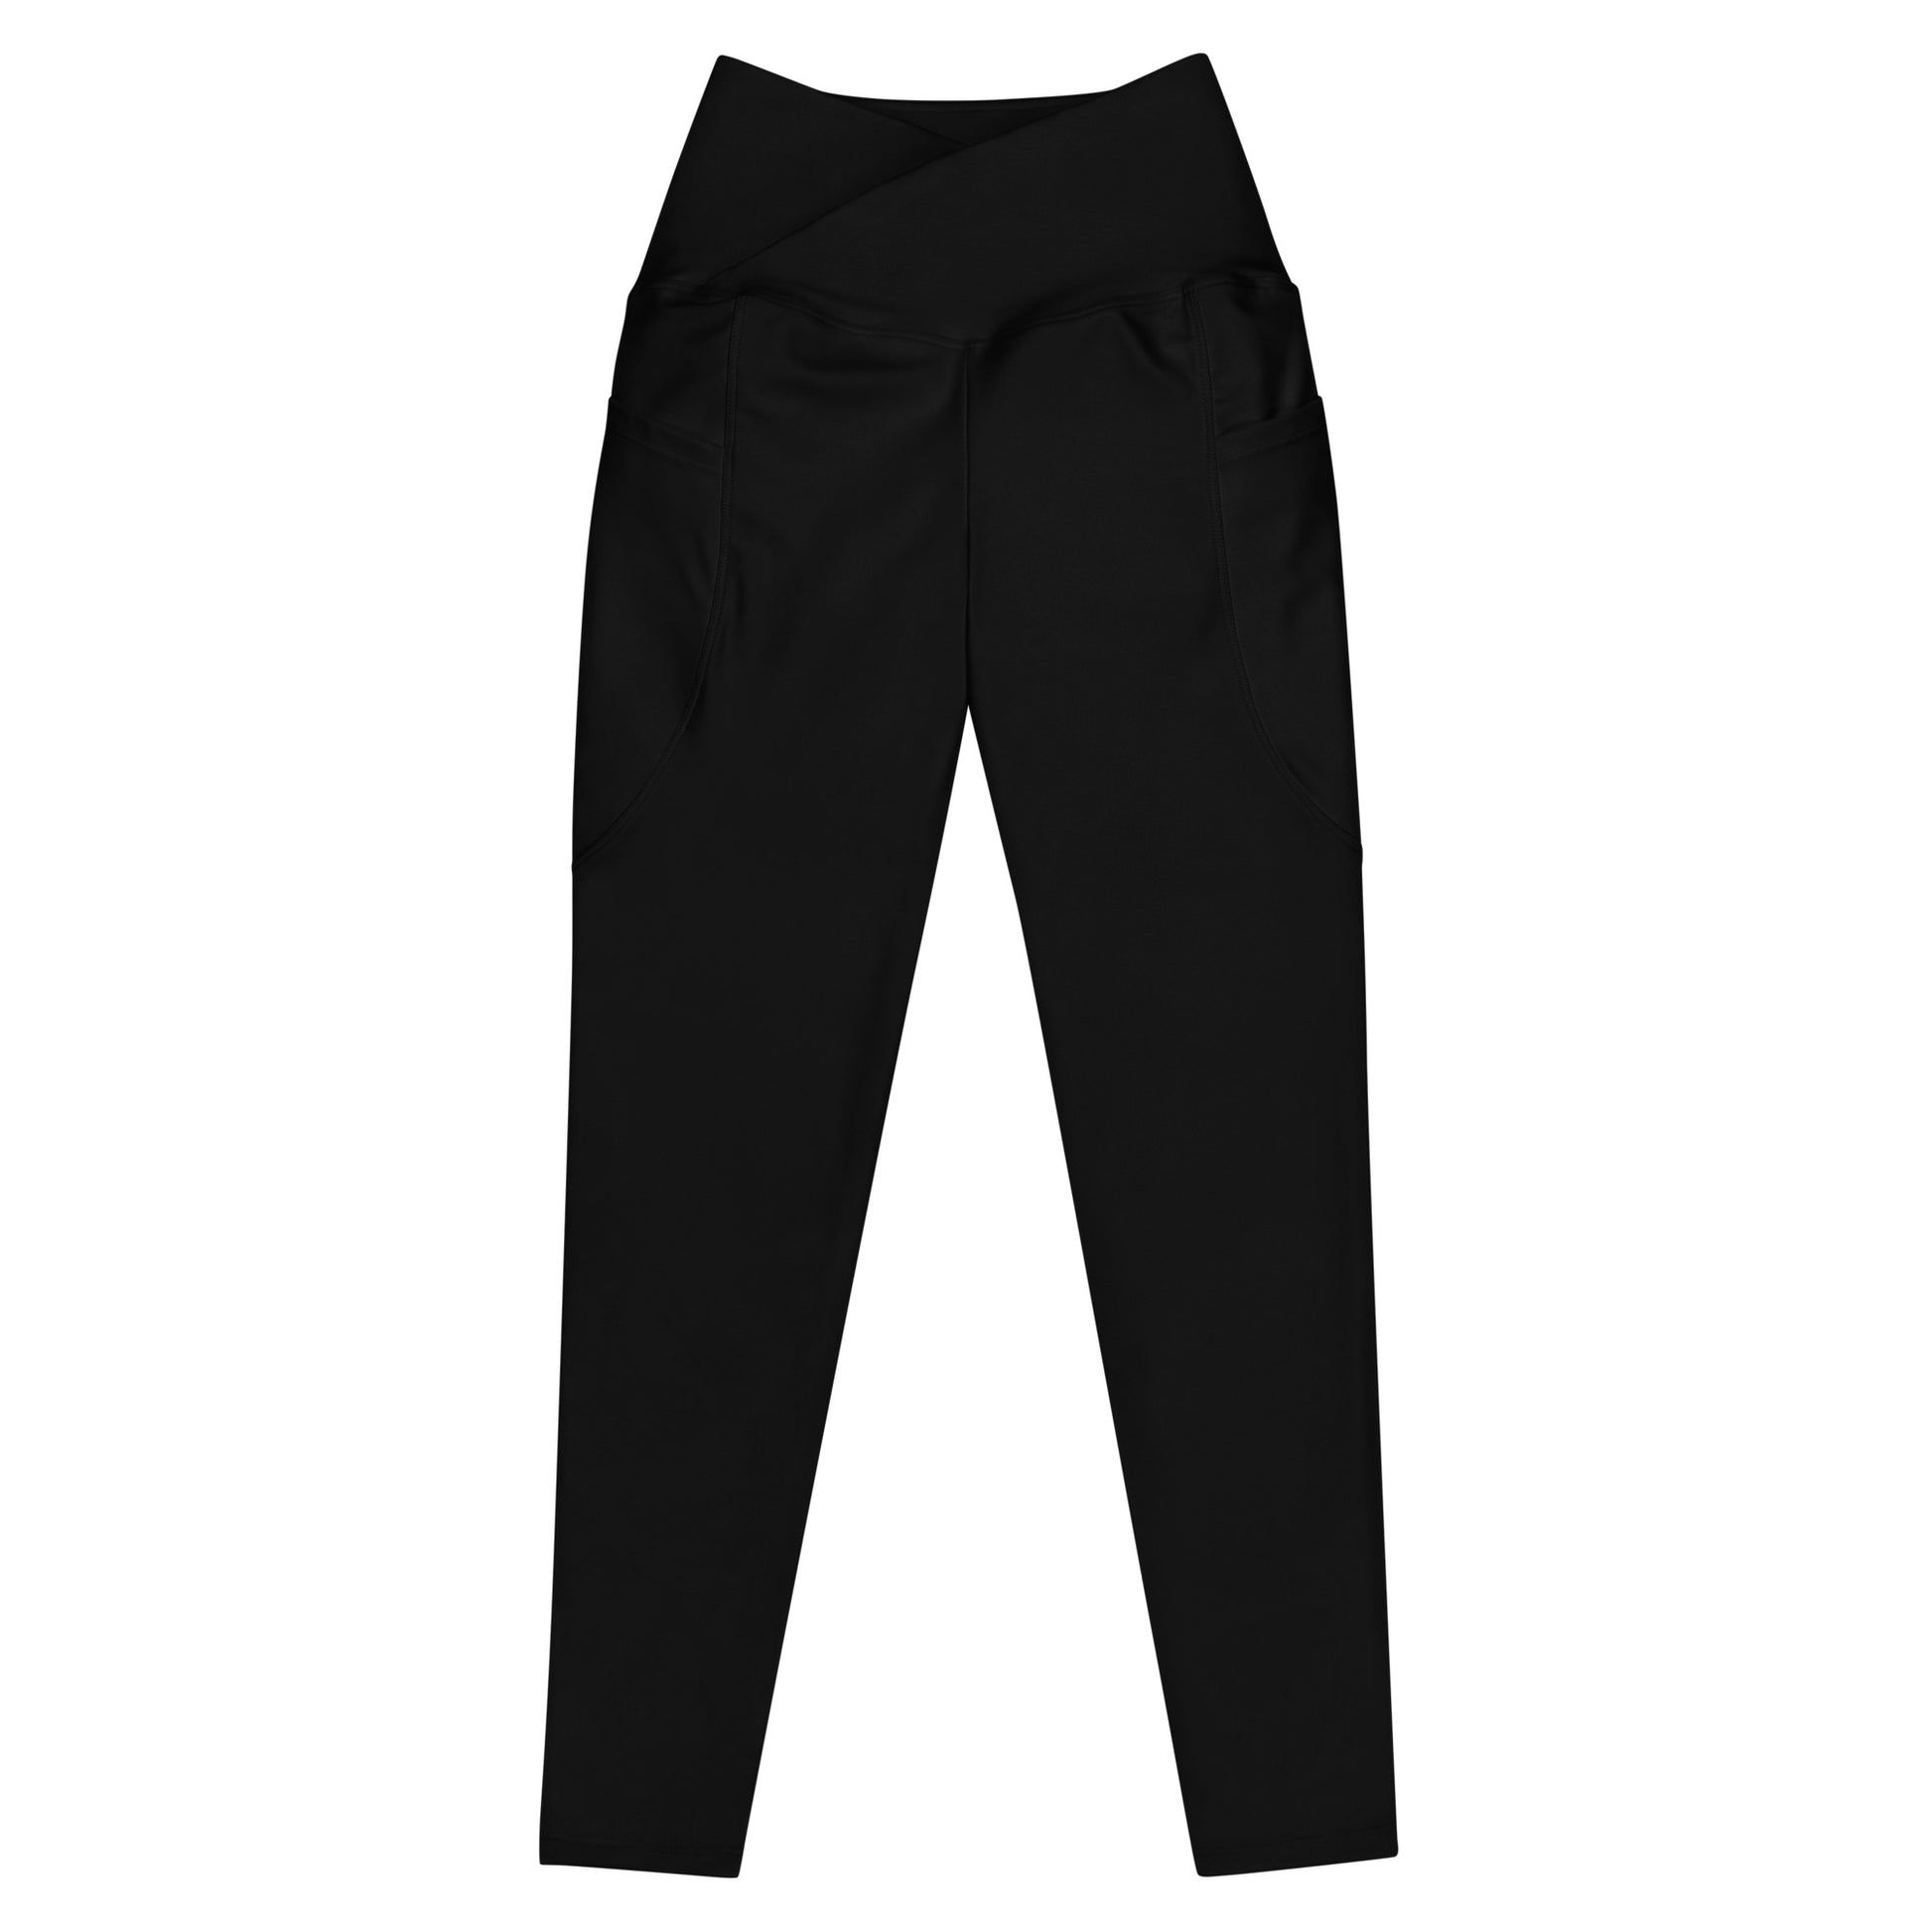 Somos Crossover leggings with pockets (black)